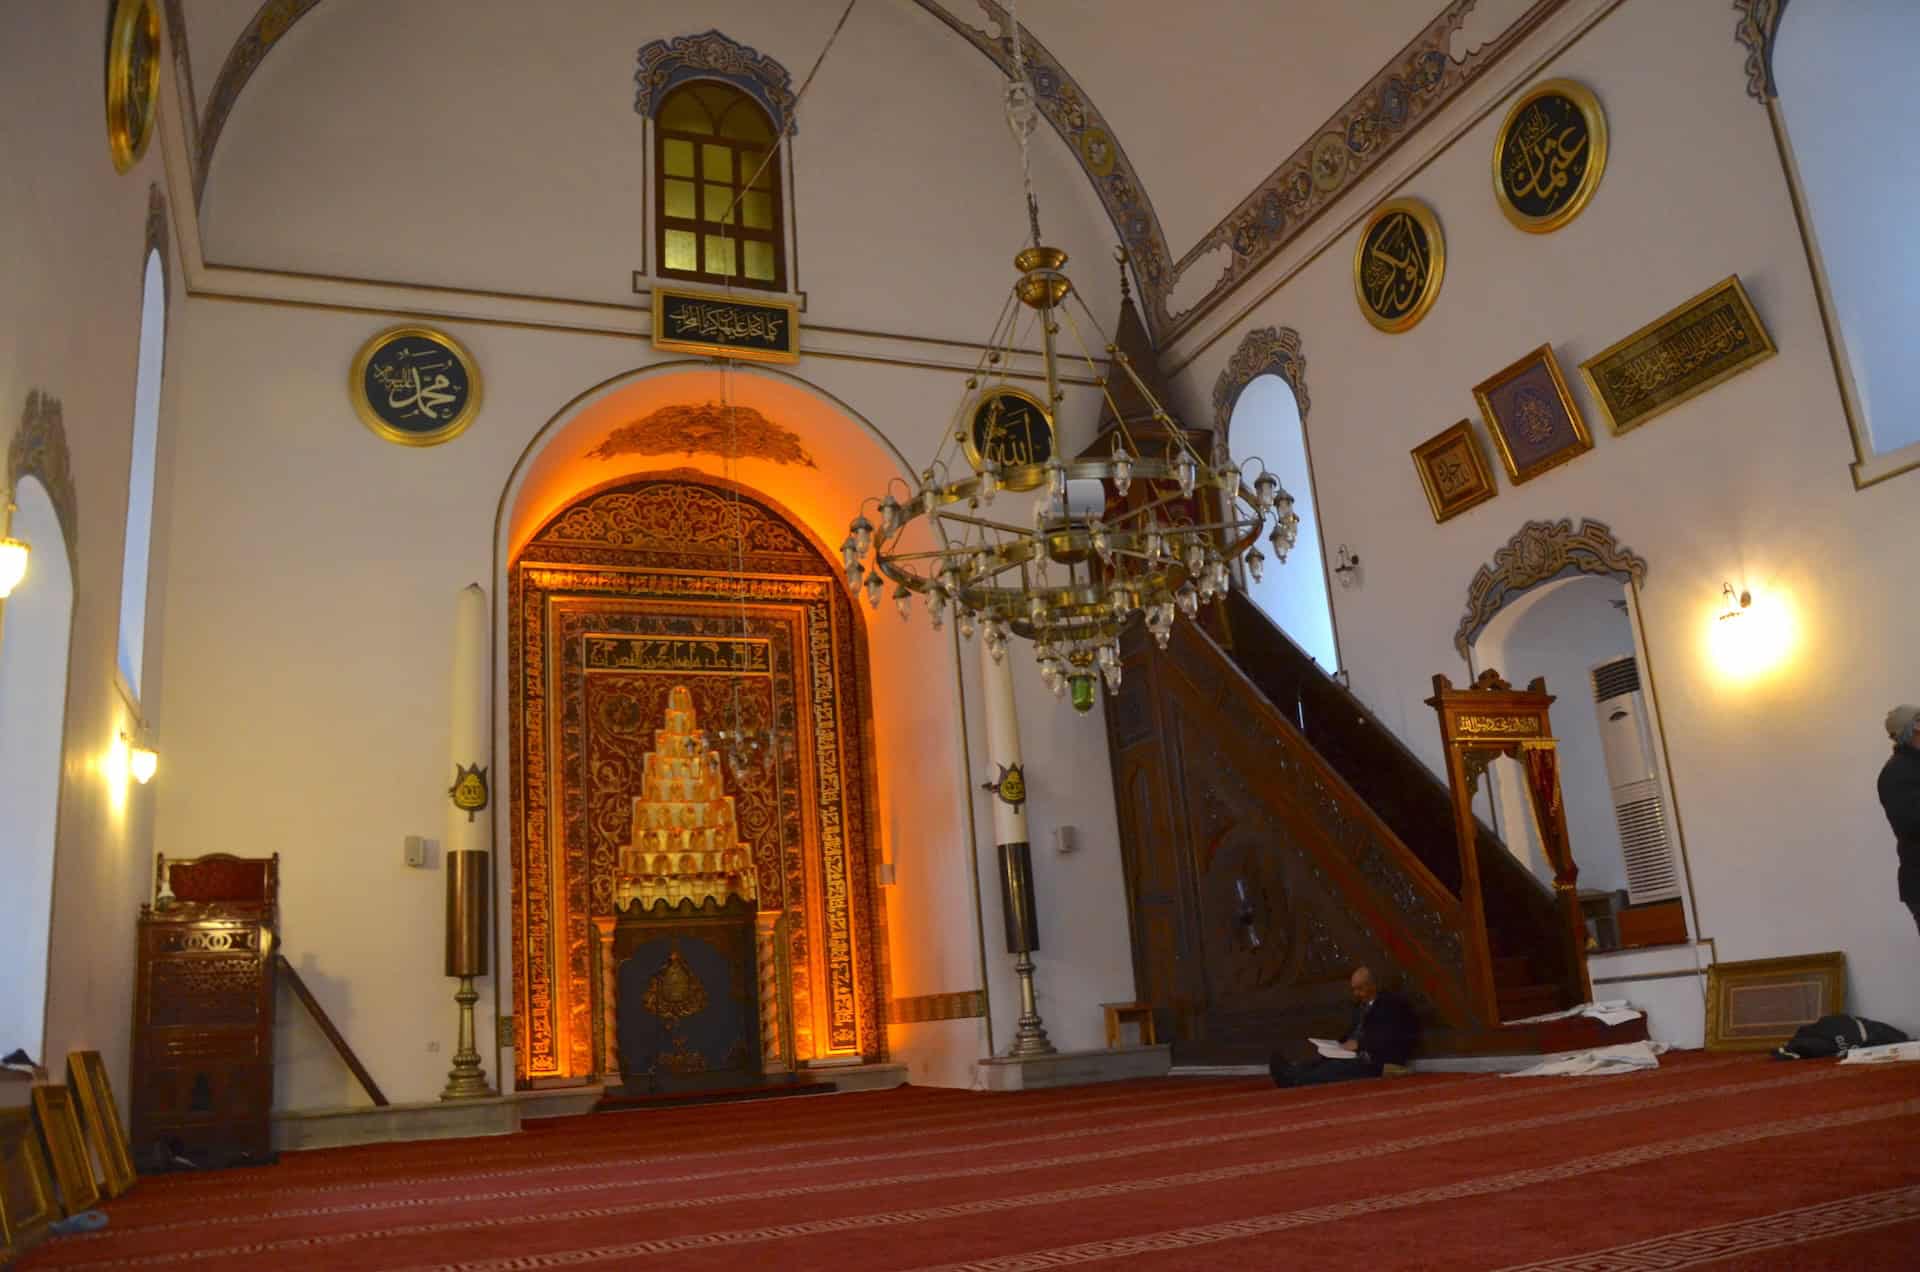 Prayer hall of the Hüdavendigâr Mosque in Çekirge, Bursa, Turkey